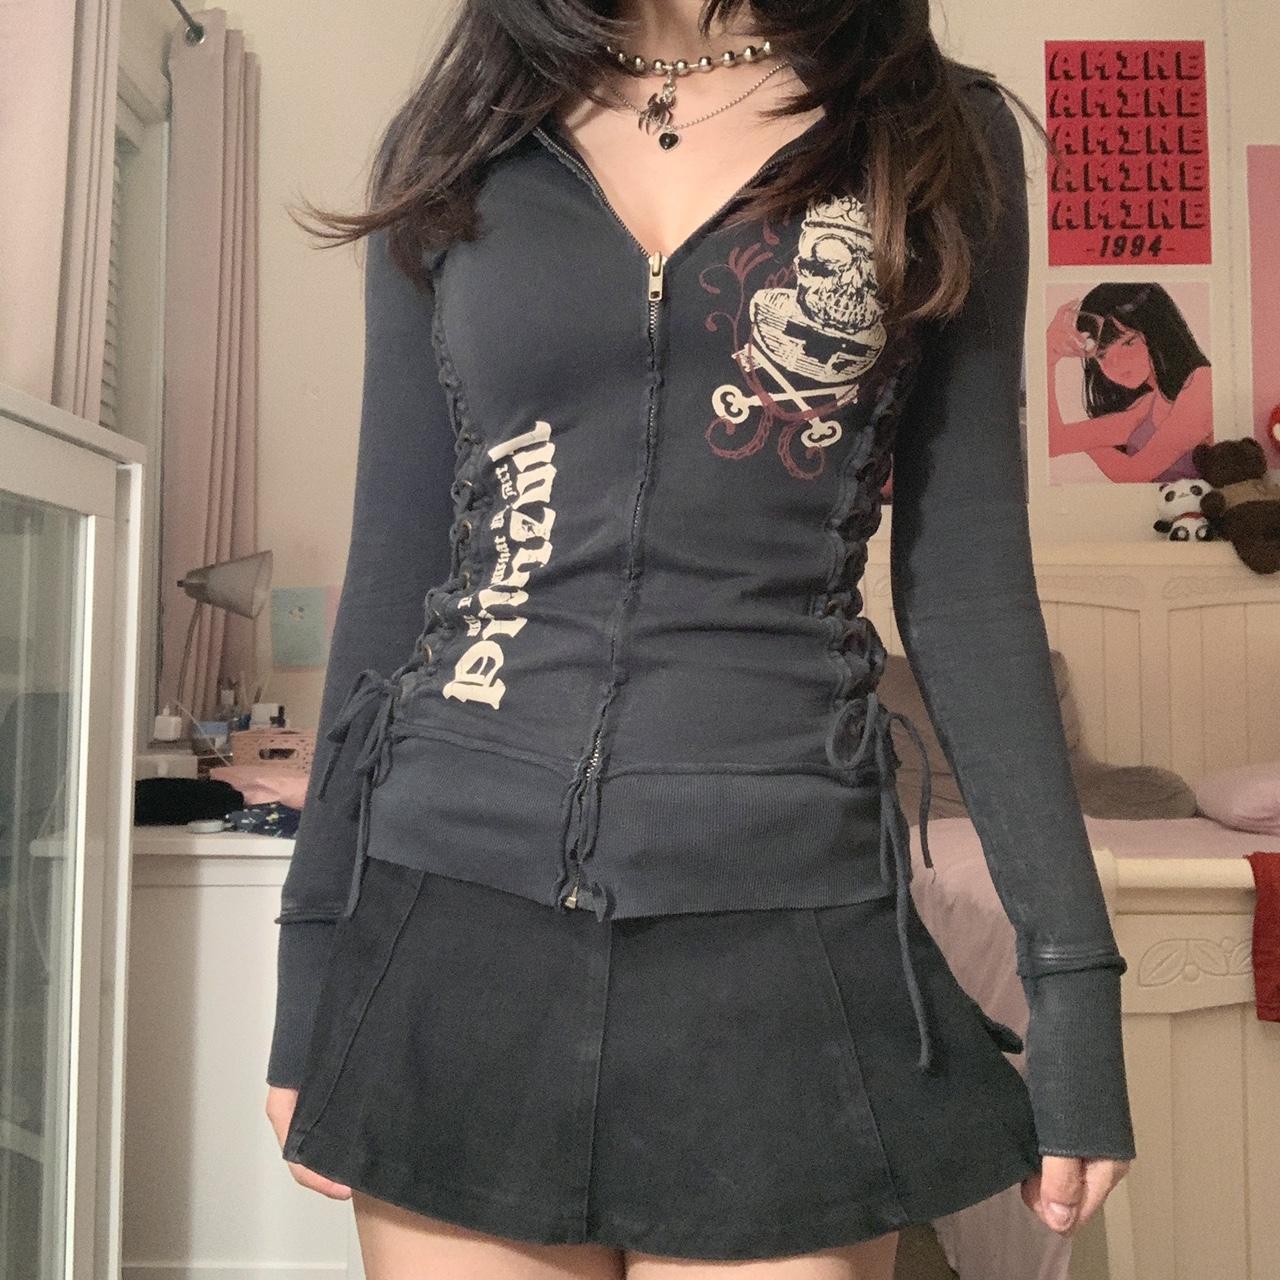 GirlKino Vintage Bandage Zip-Up Hoodies Y2k Aesthetic Print Women Long Sleeve Crop Tops 2000S Retro Jackets Grunge Clothes